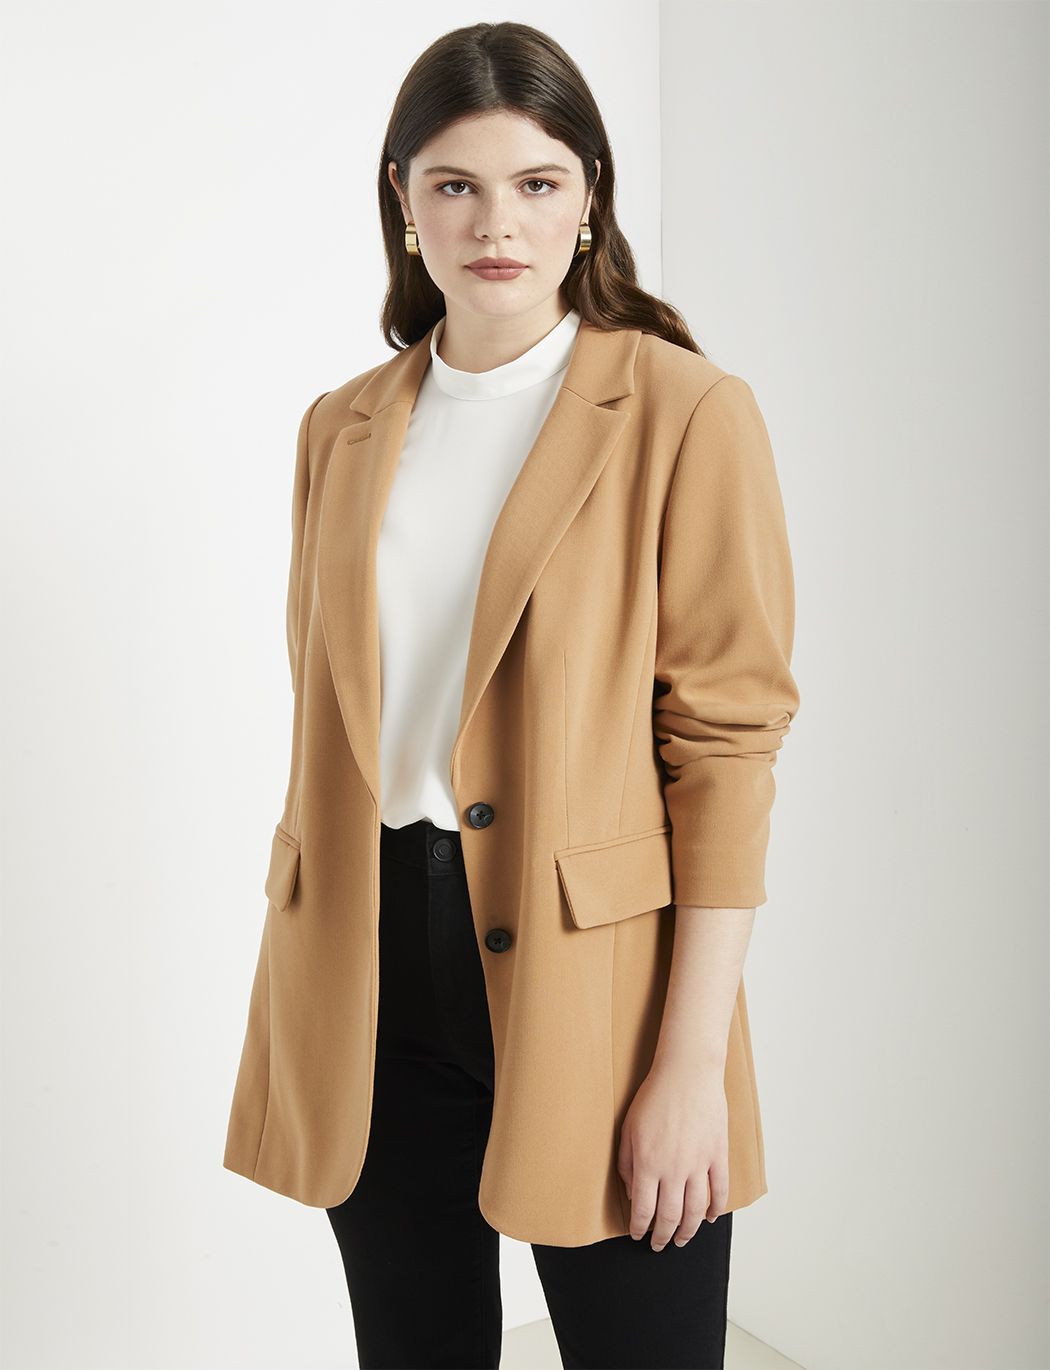 Long Tailored Blazer | Women's Plus Size Coats + Jackets | ELOQUII | Eloquii